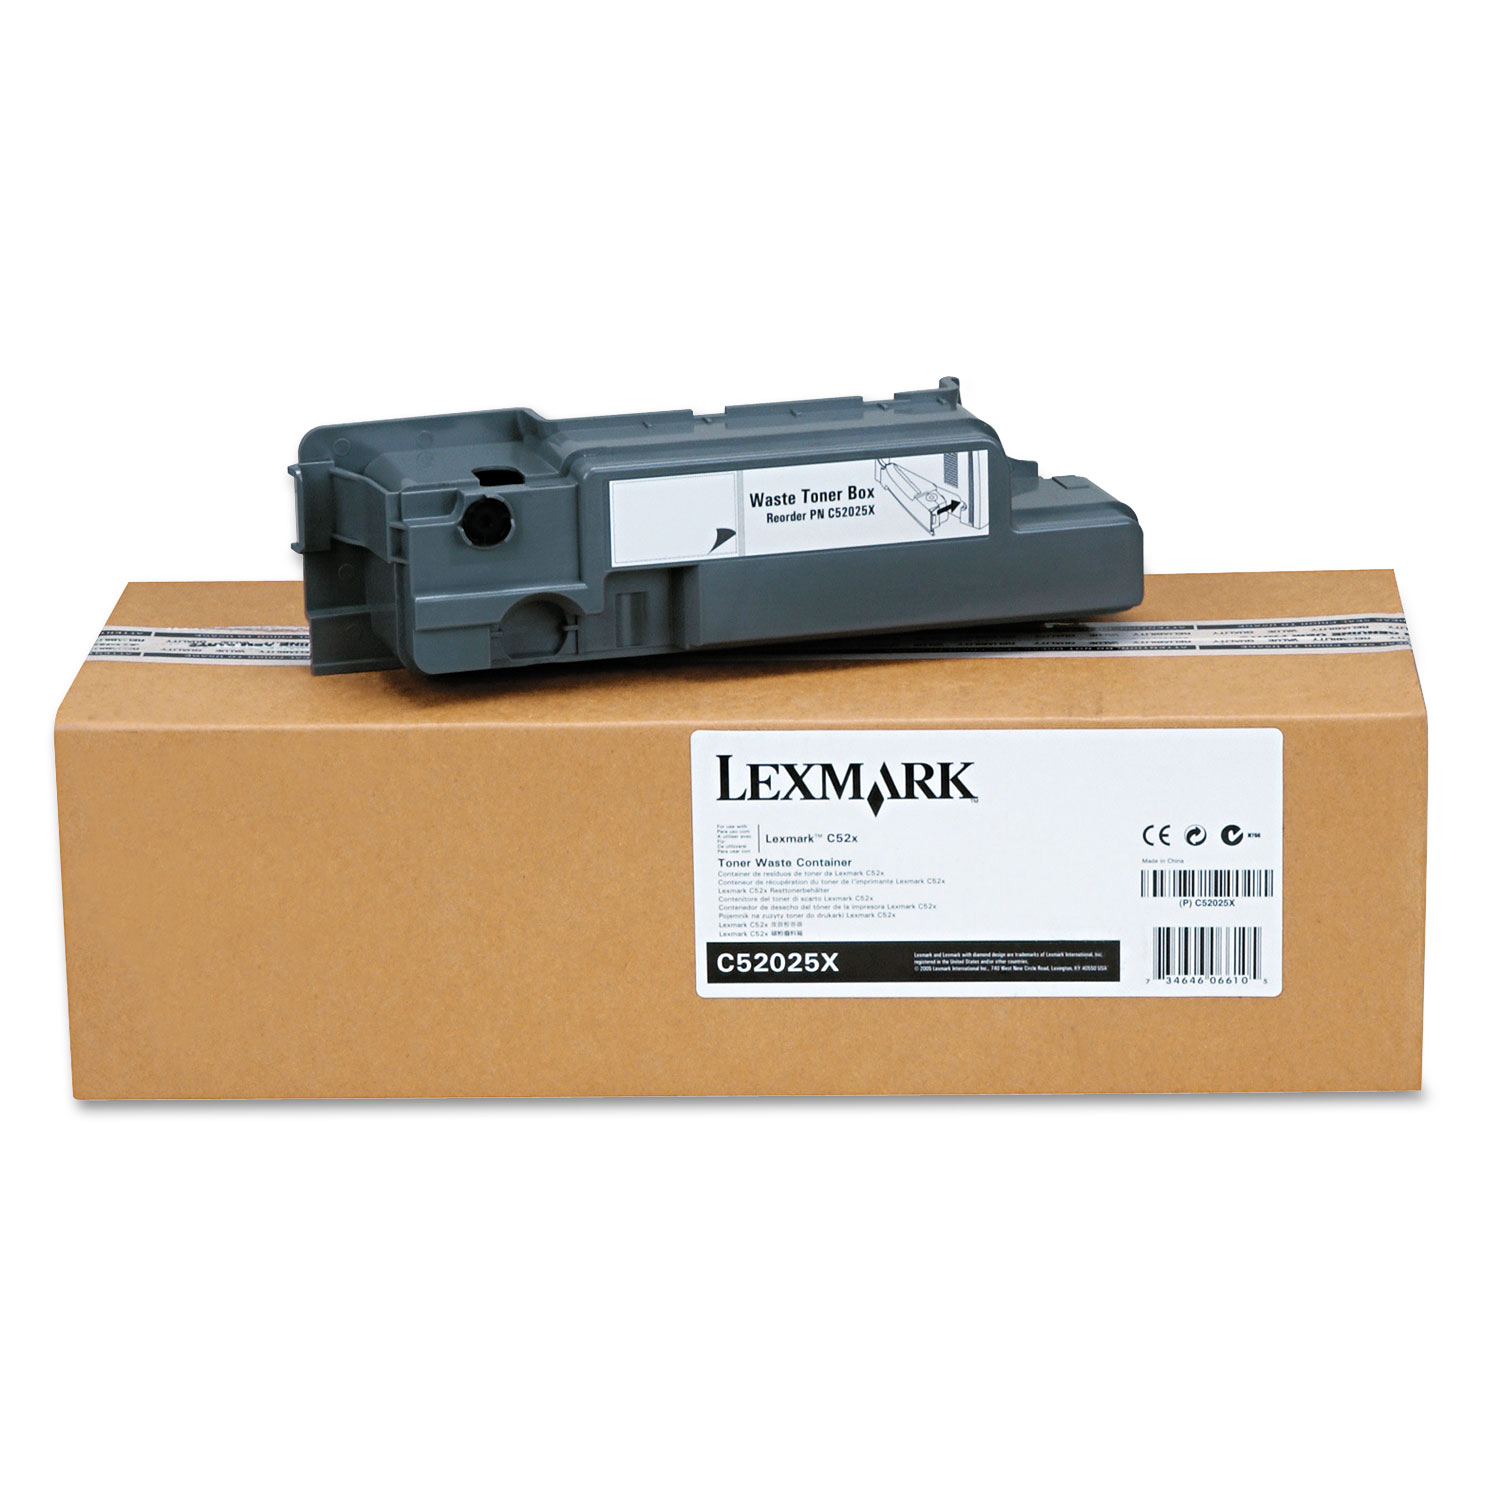  Lexmark C52025X C52025X Waste Toner Box, 30000 Page-Yield (LEXC52025X) 